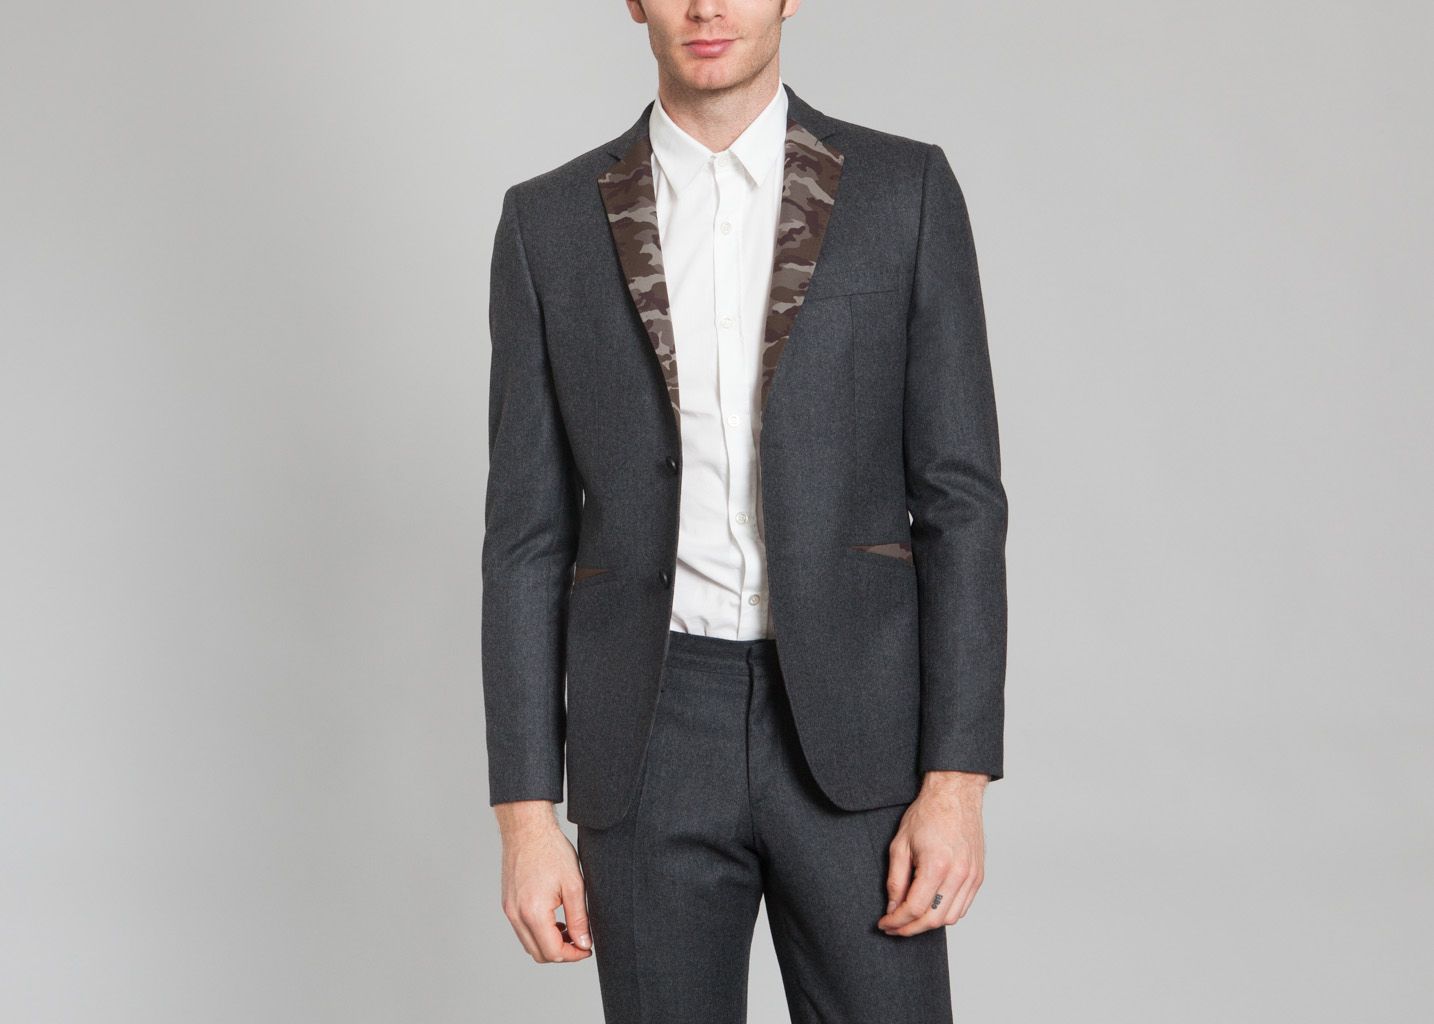 Glamorous Suit - Jean-Paul Loyson